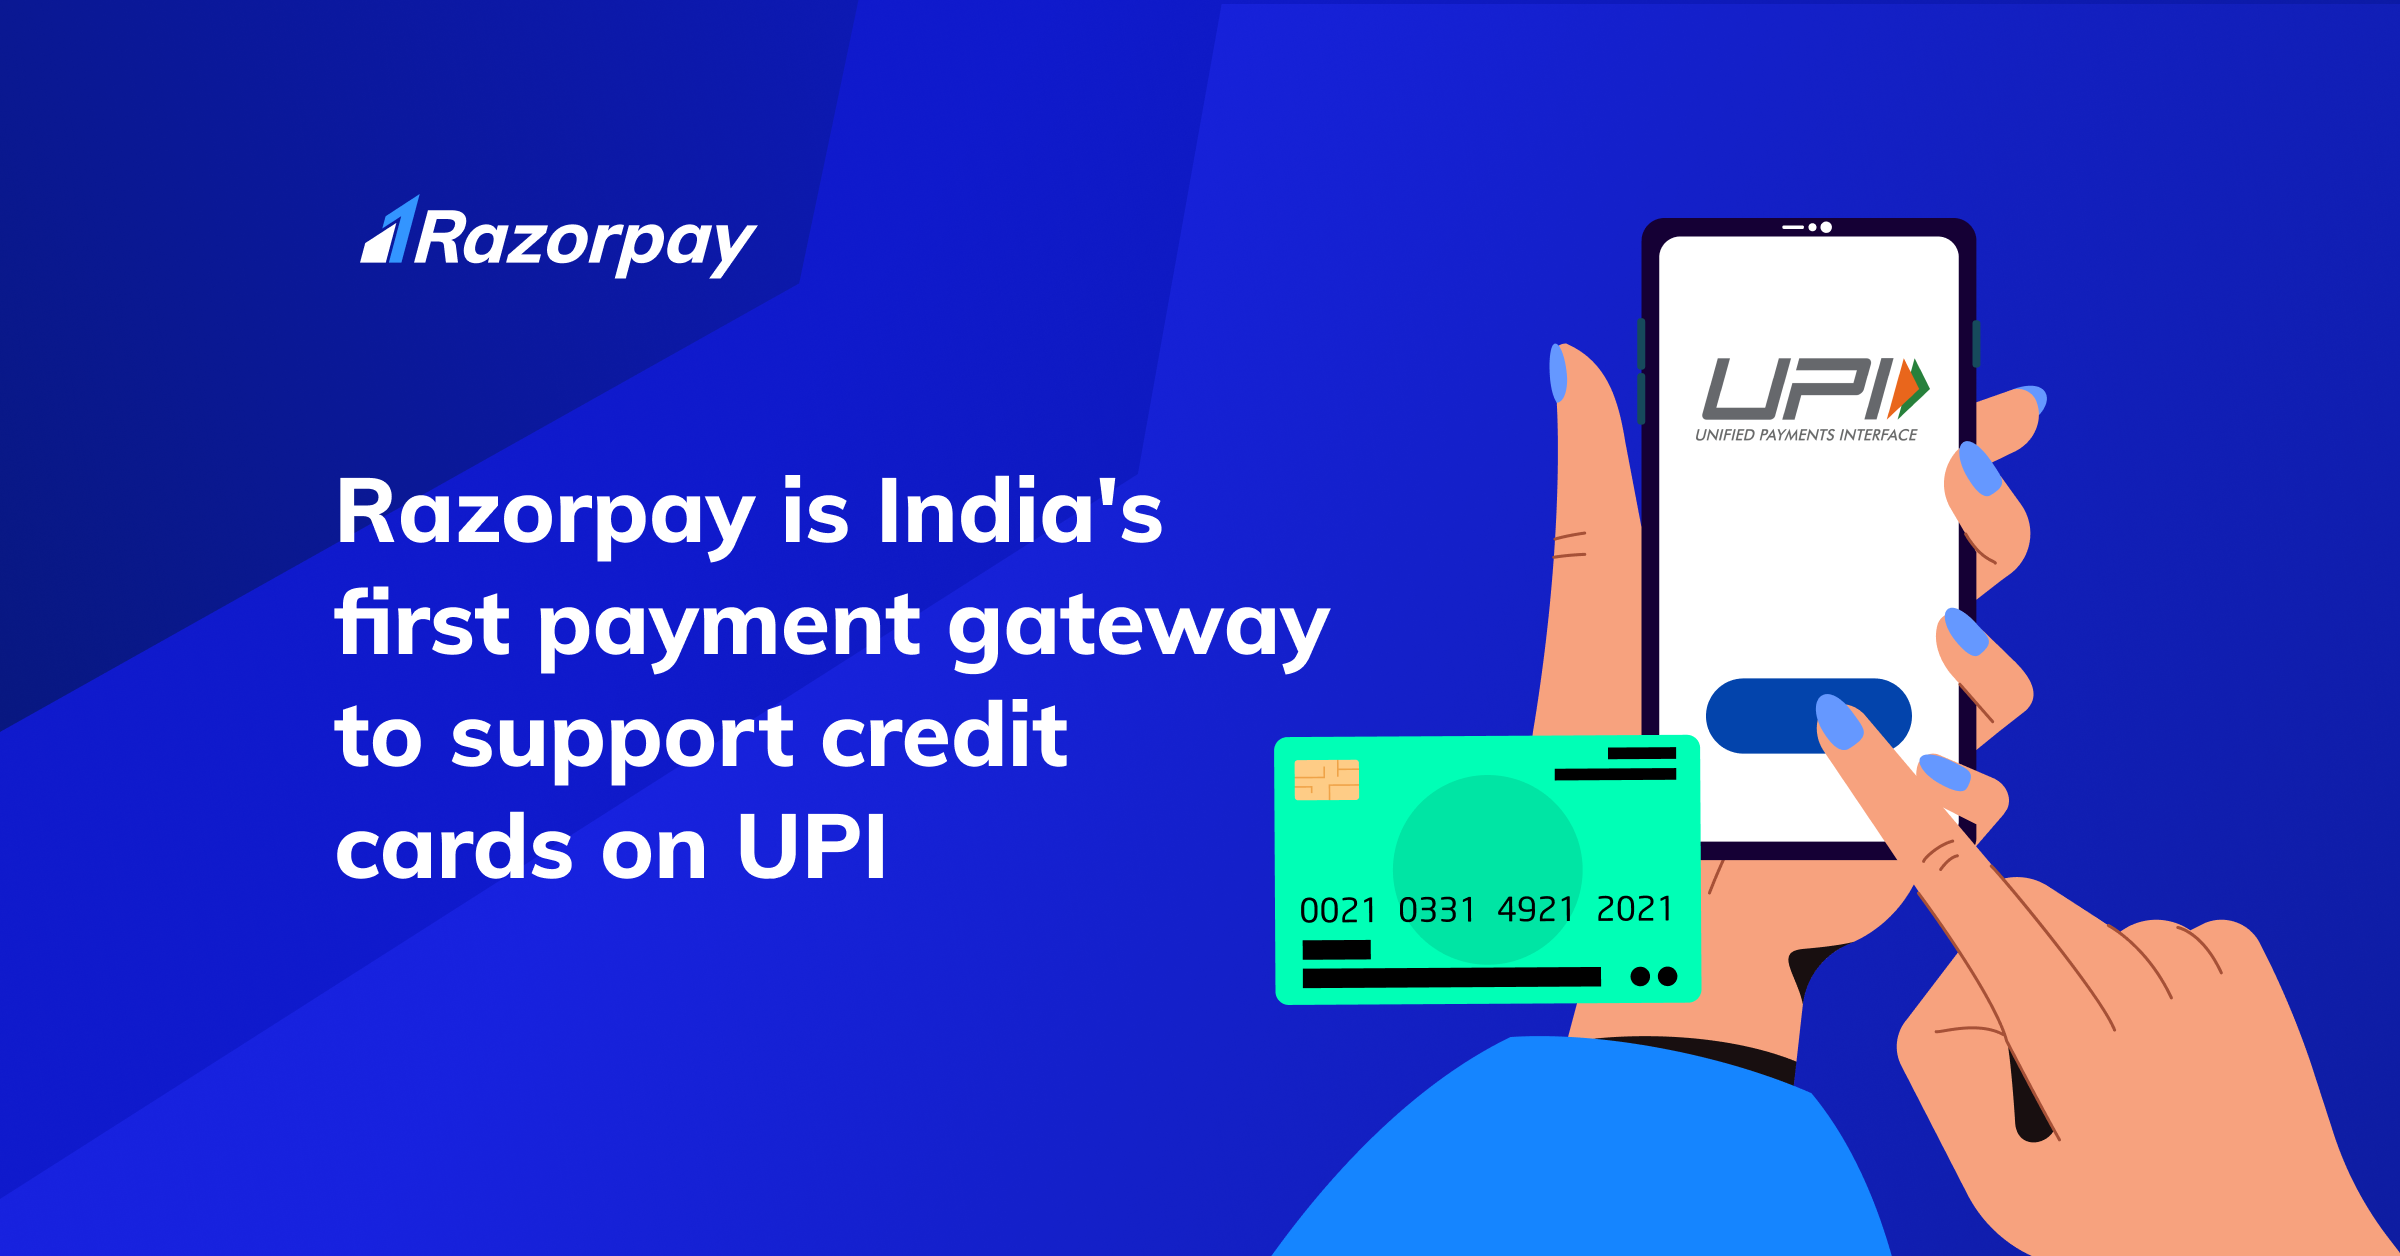 Razorpay Enable Credit Card Transactions Through UPI